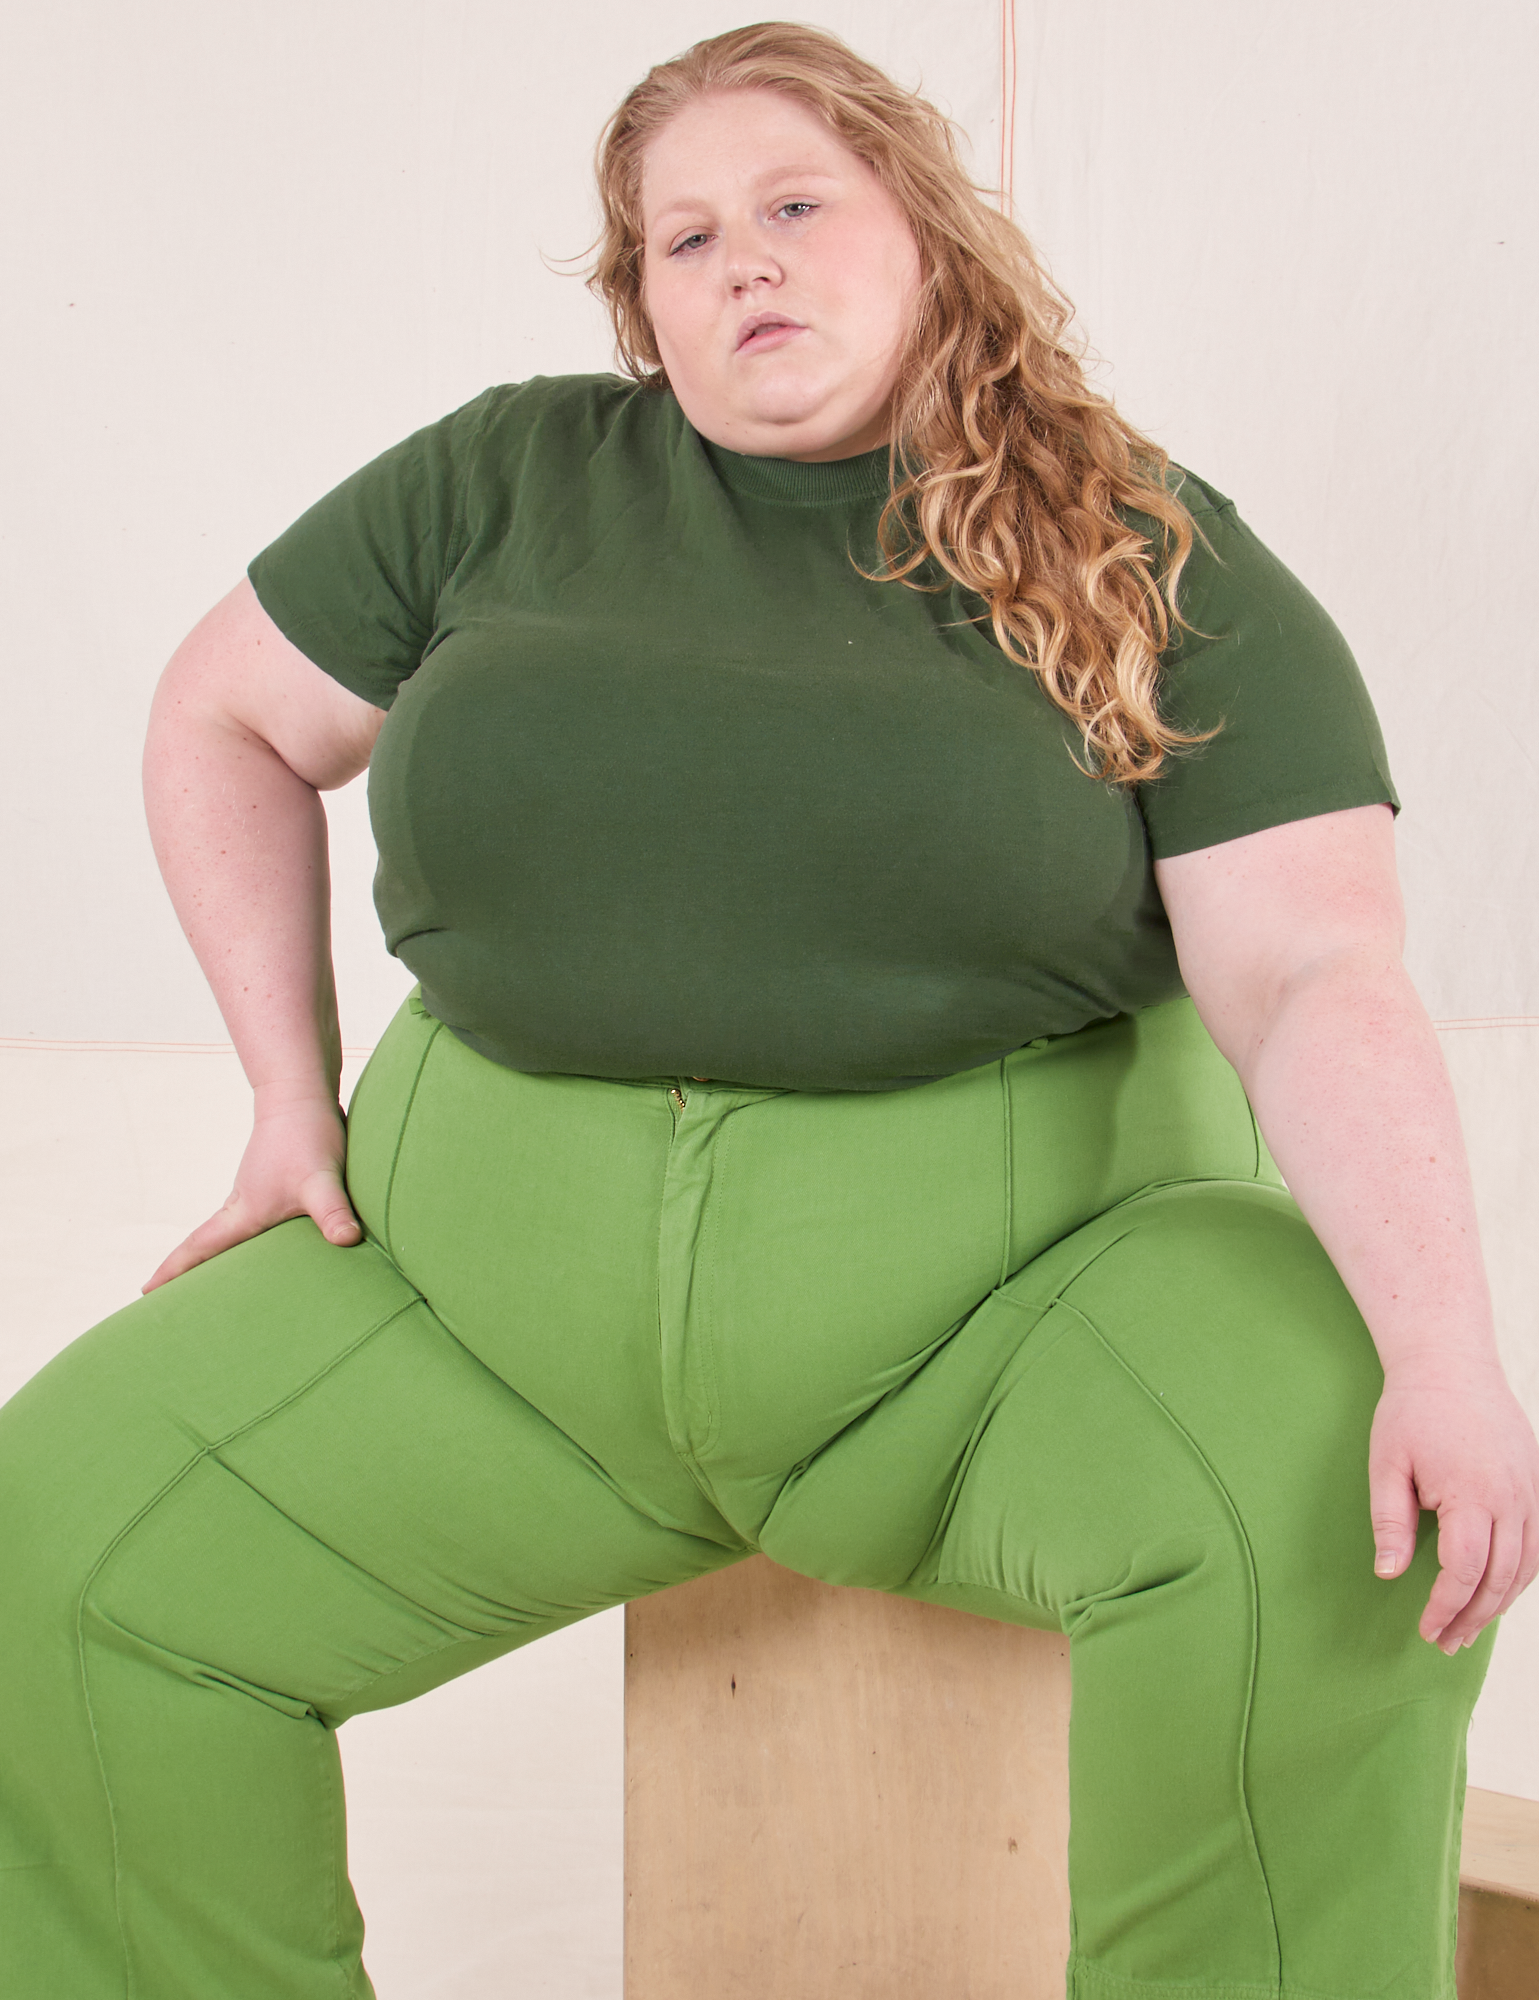 Catie is wearing Organic Vintage Tee in Dark Emerald Green and gross green Western Pants